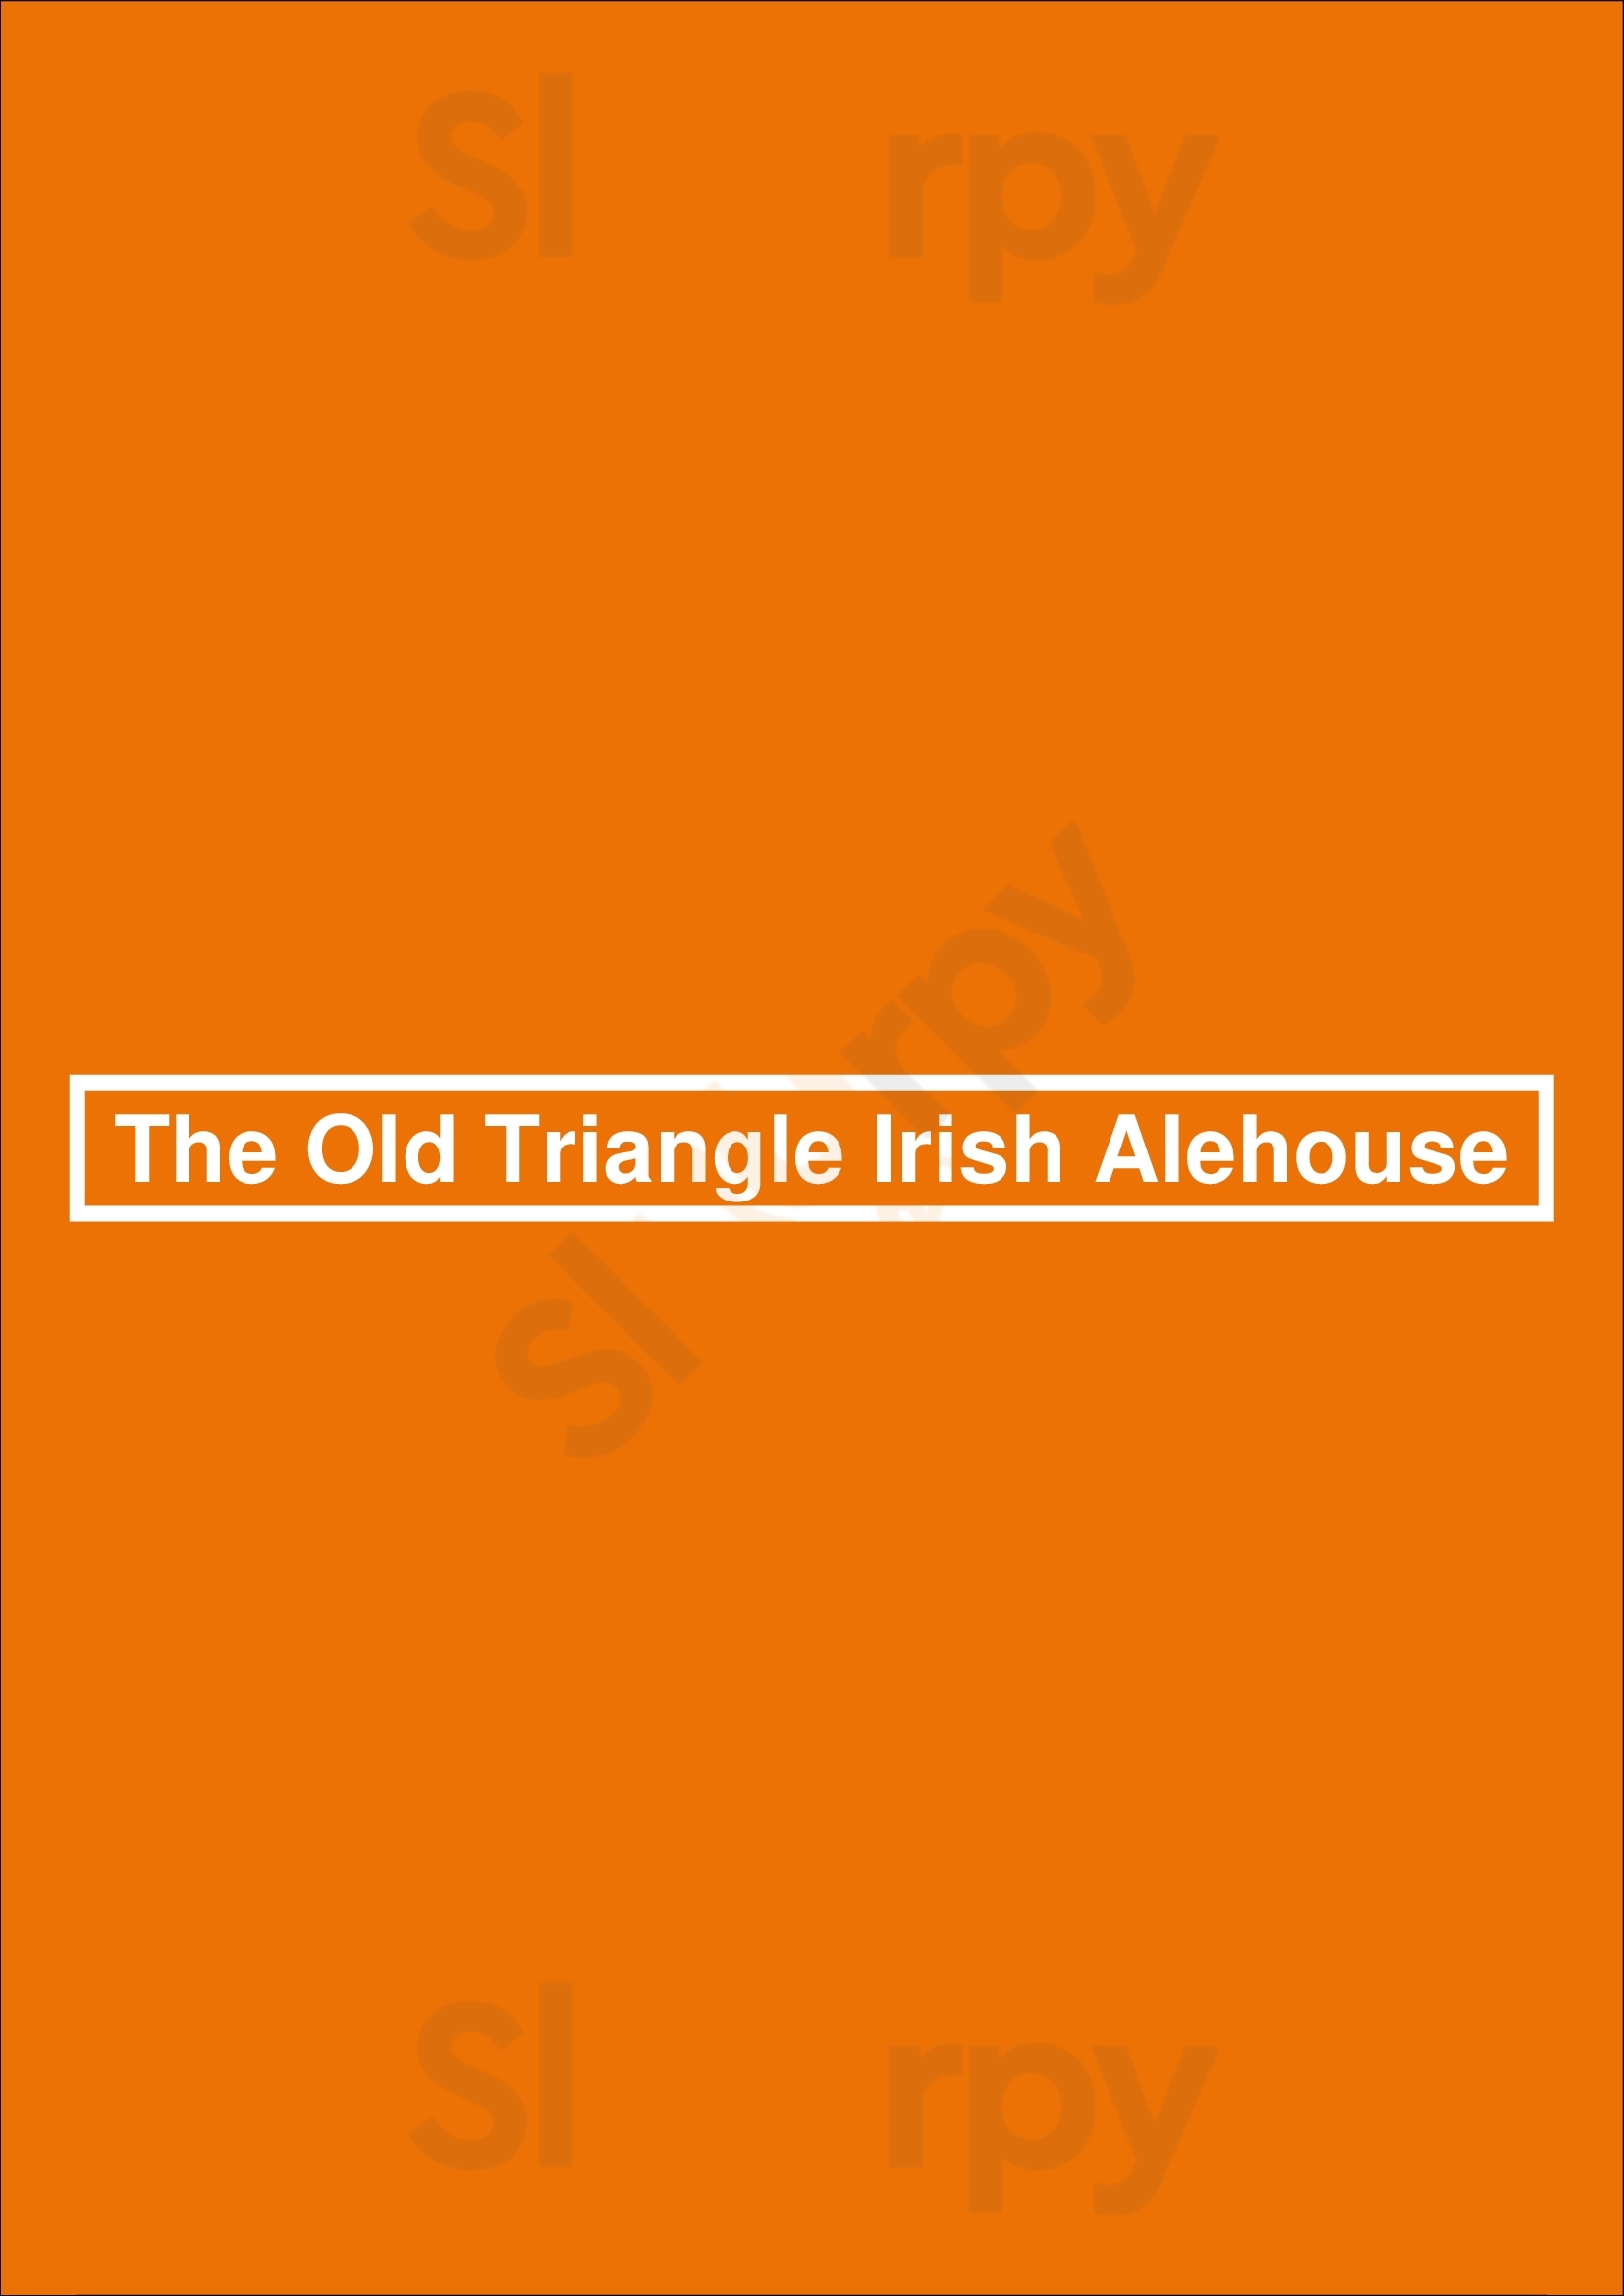 The Old Triangle Irish Alehouse Sydney Menu - 1